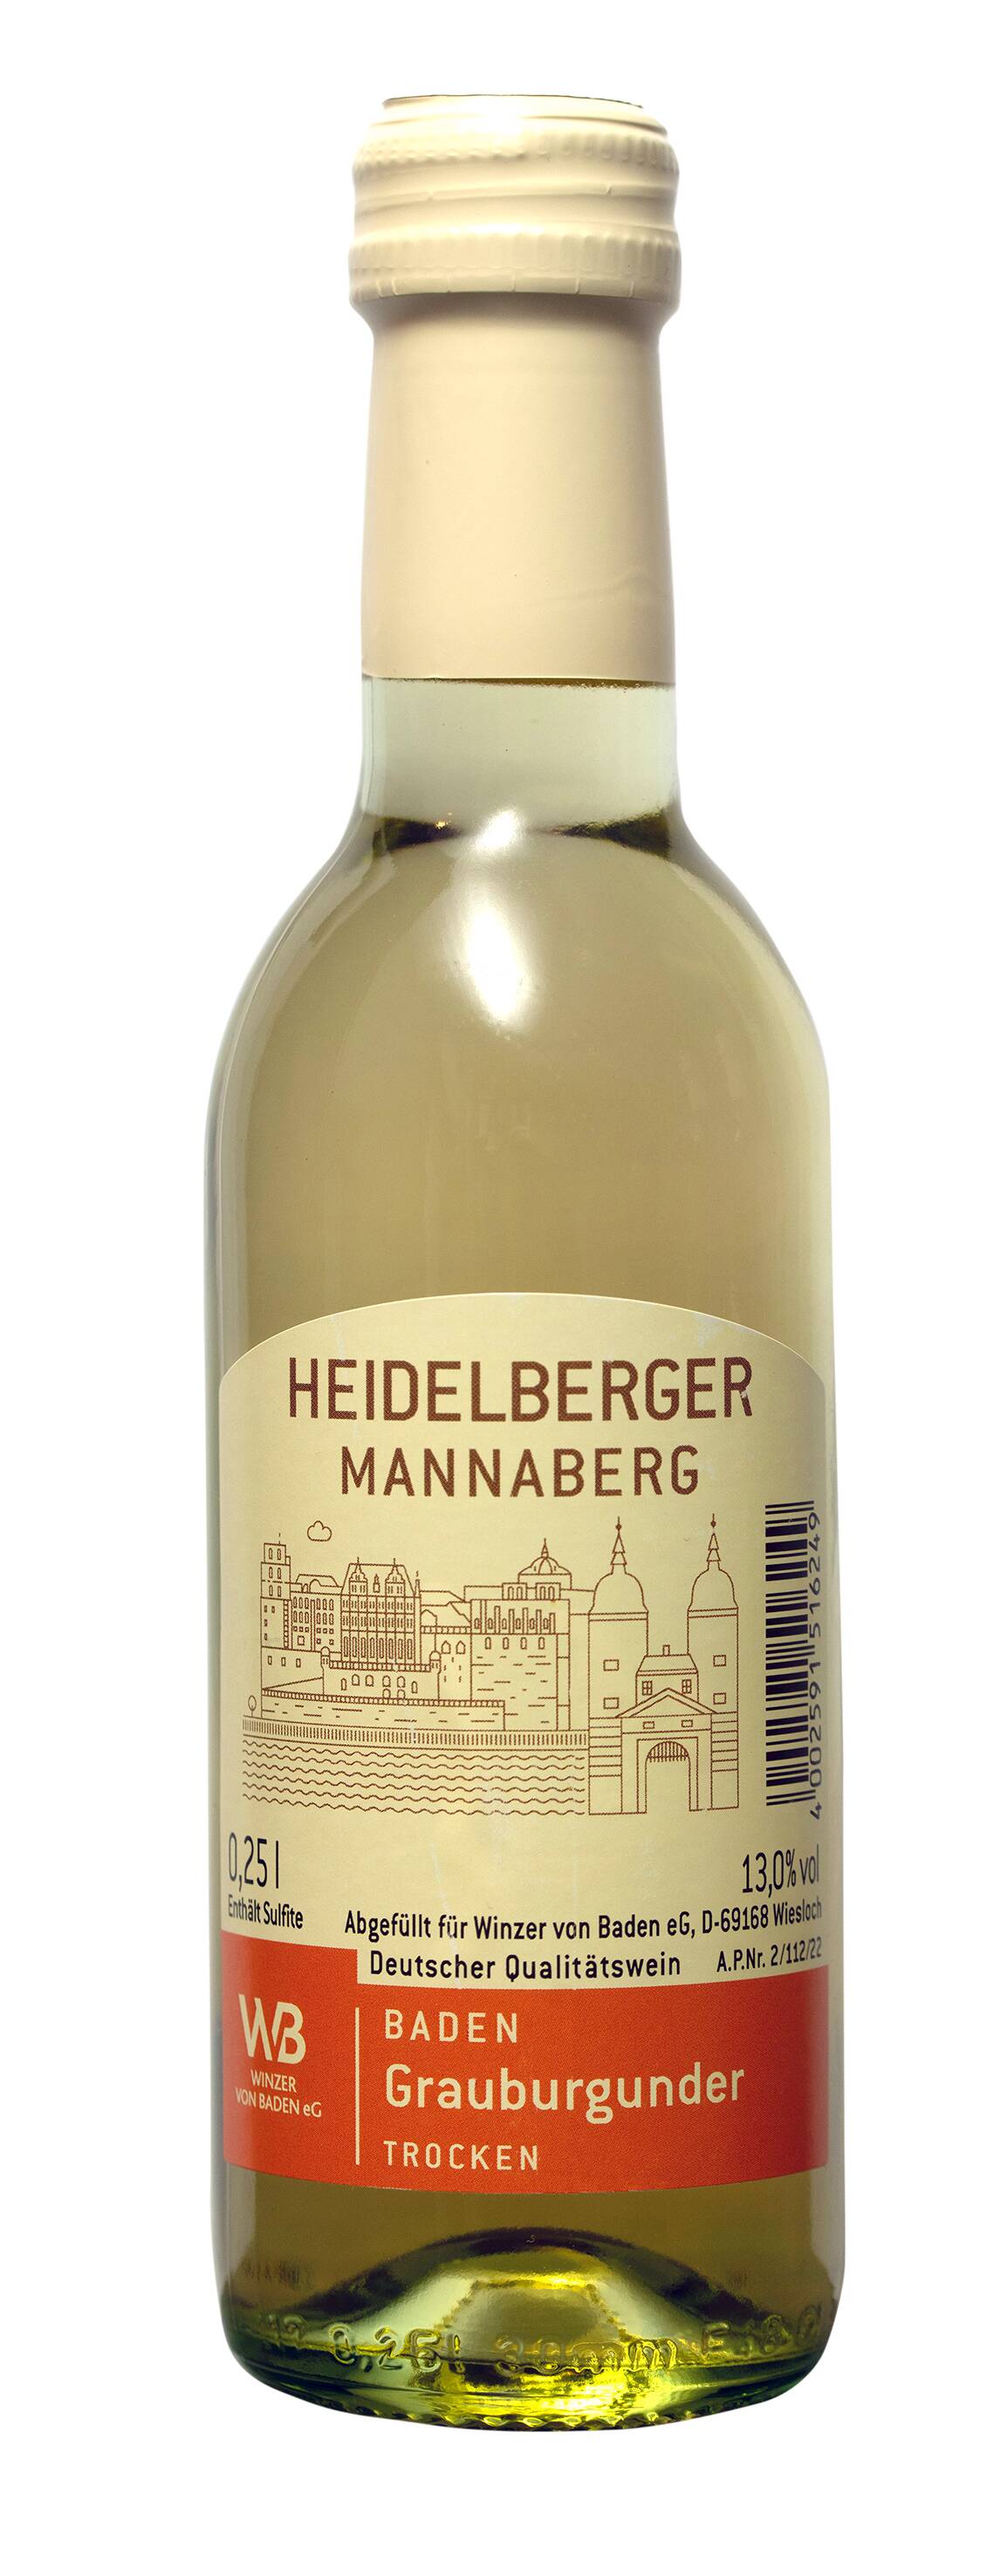 Heidelberger Mannaberg Grauburgunder Weinmini